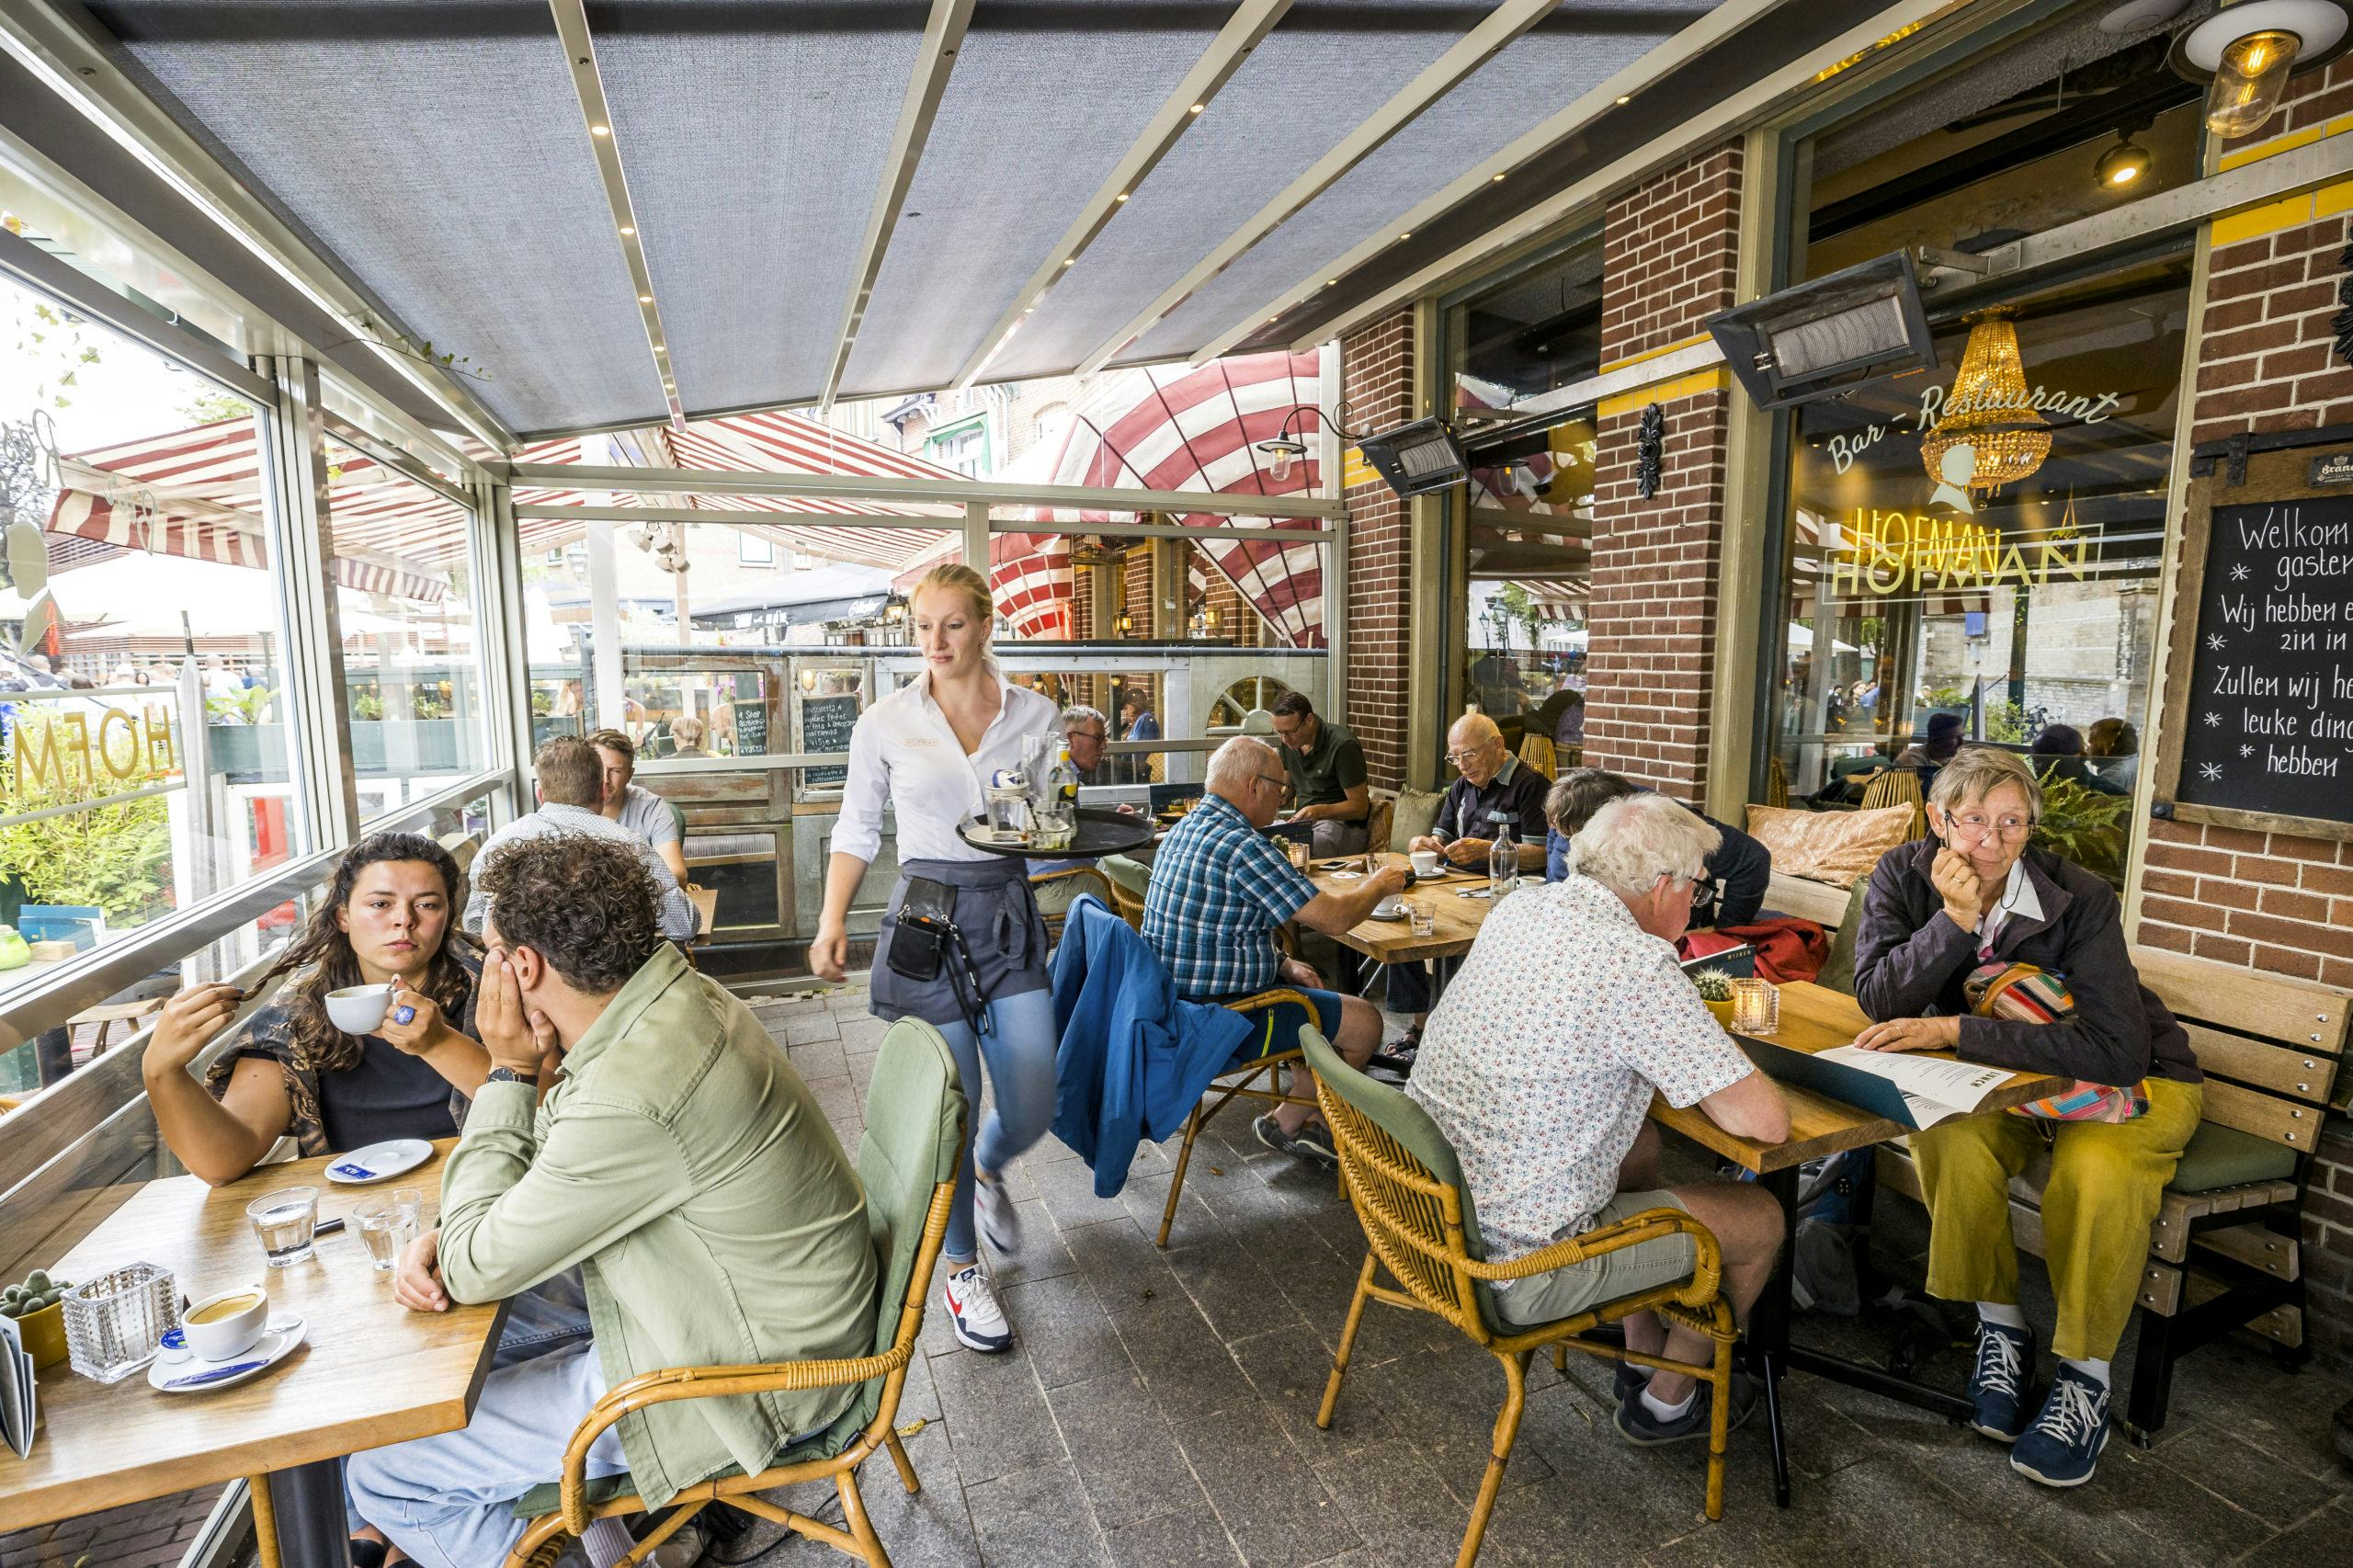 Terras Top 100 2021 nr. 3: Restaurant Hofman, Alkmaar